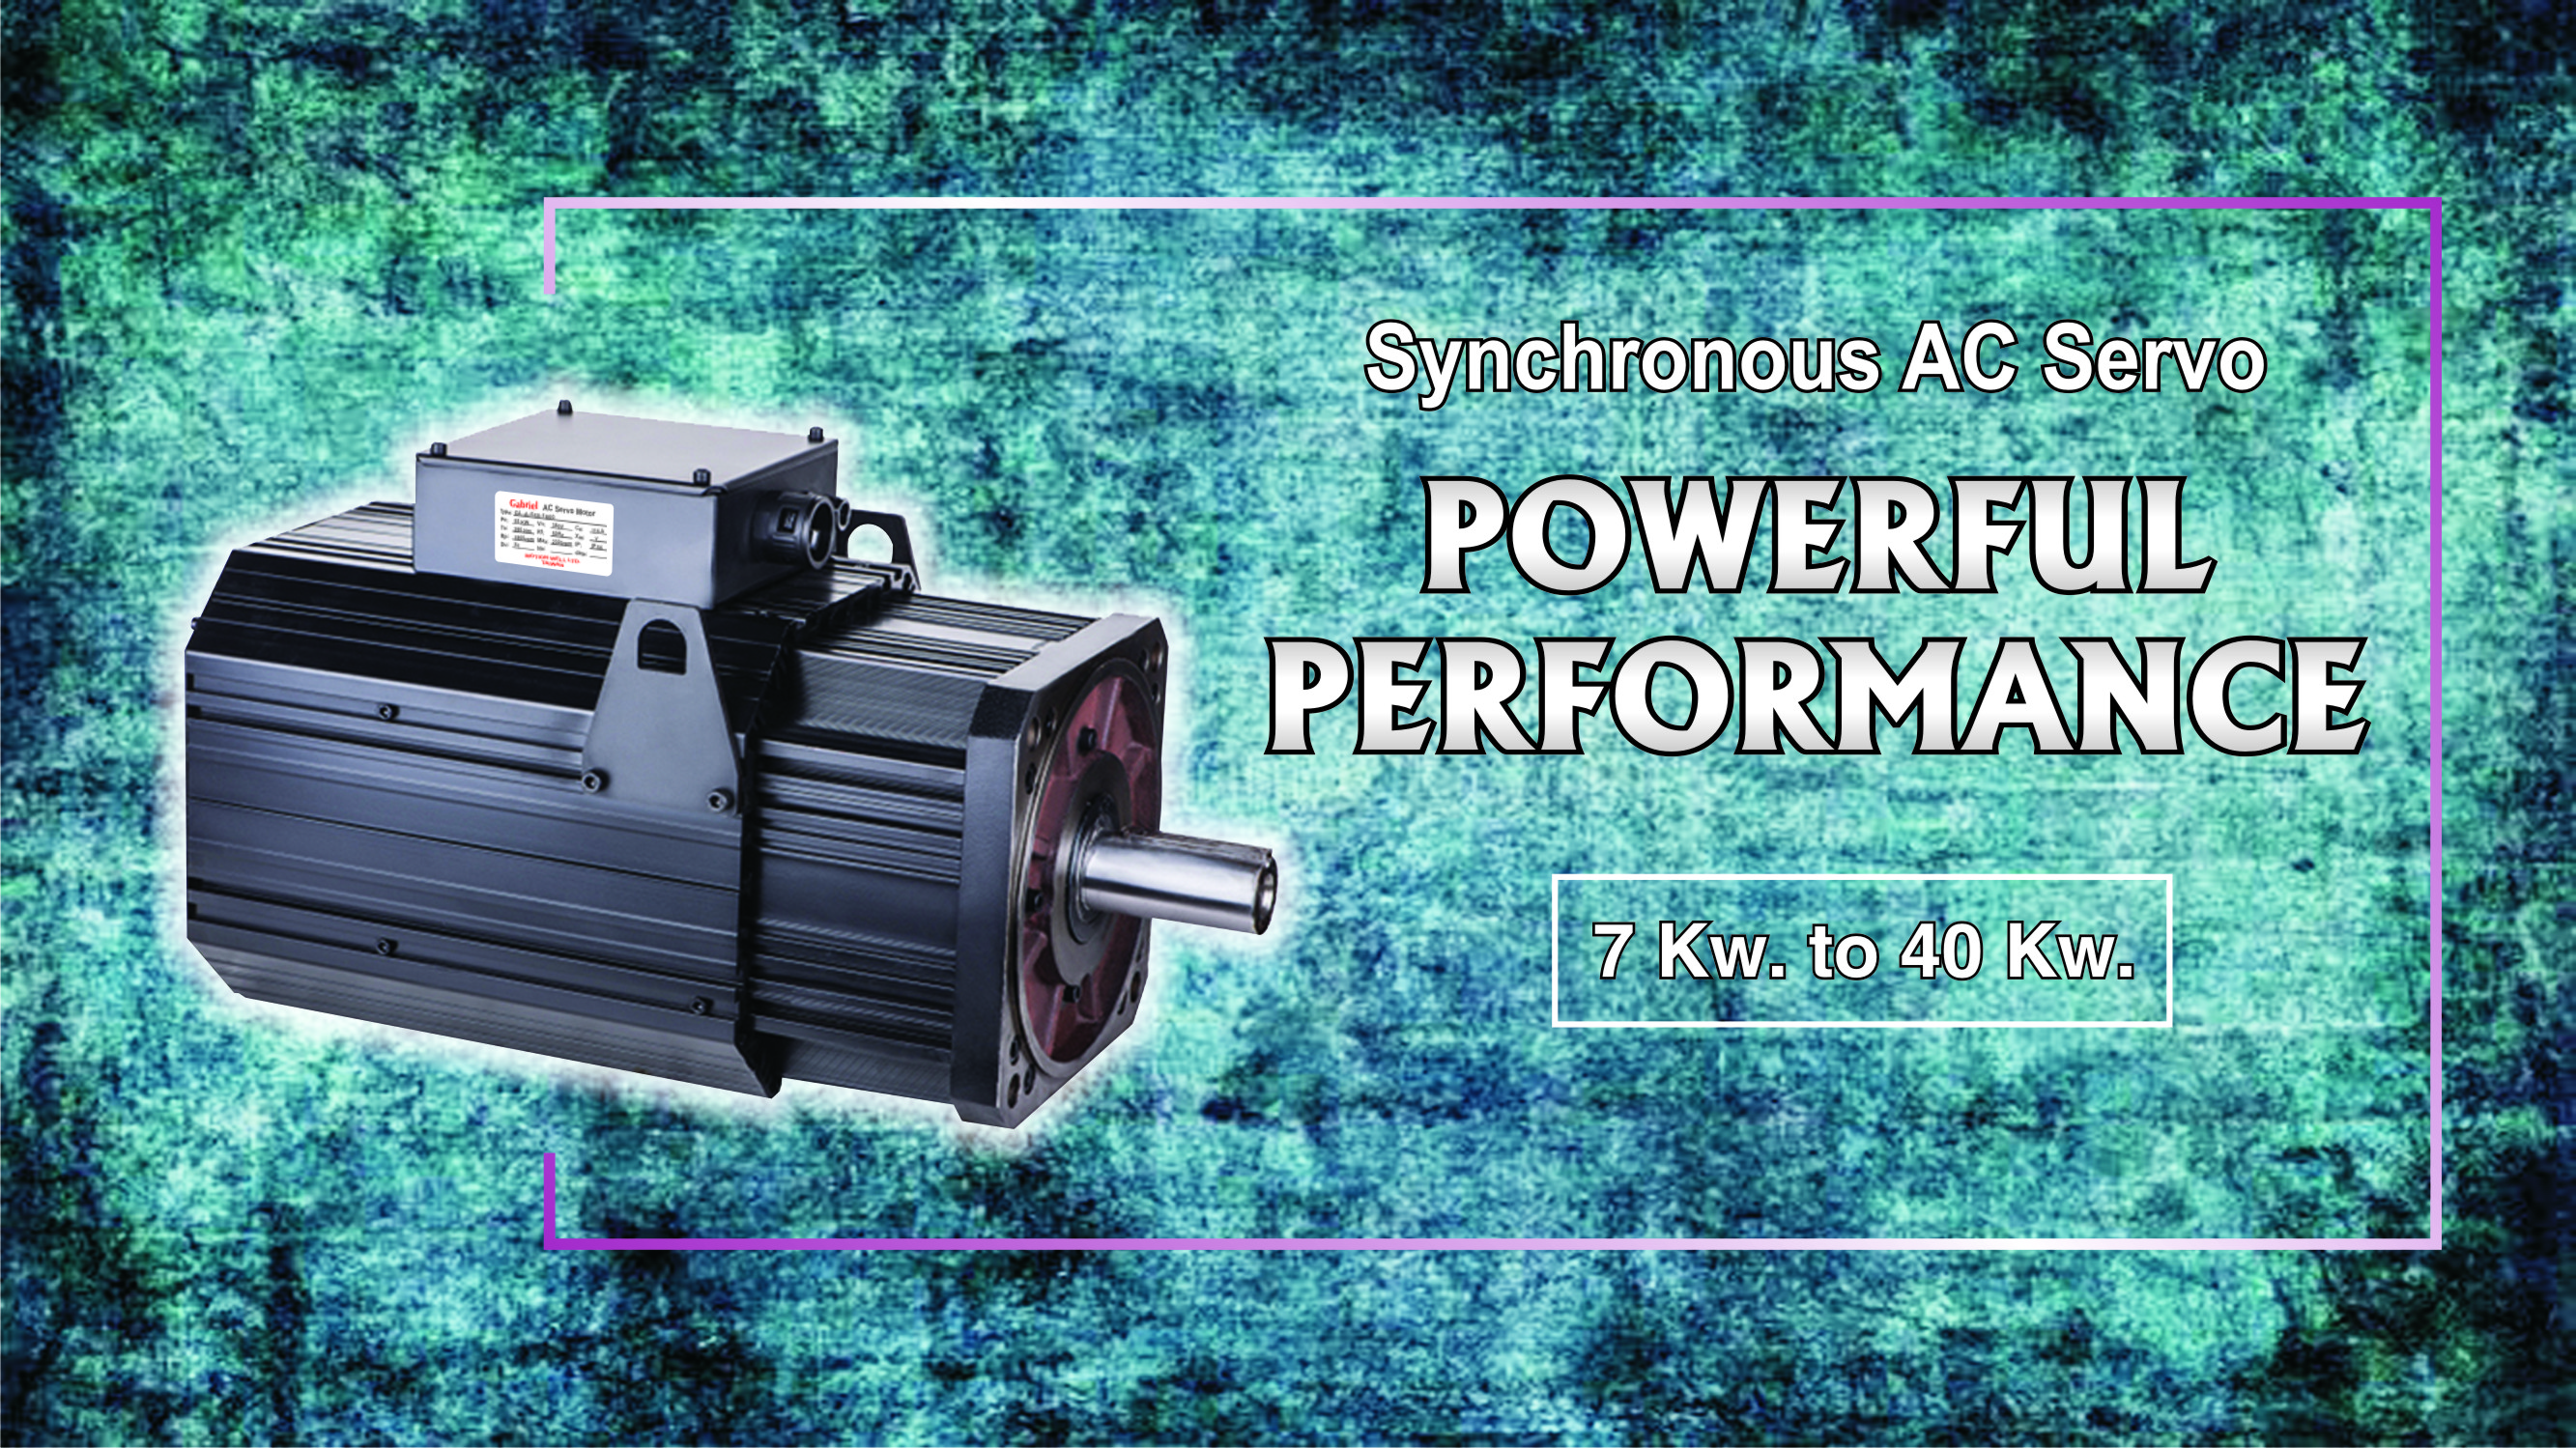 Synchronous AC Servo with 7 kw. to 40 kw Powerful Performance